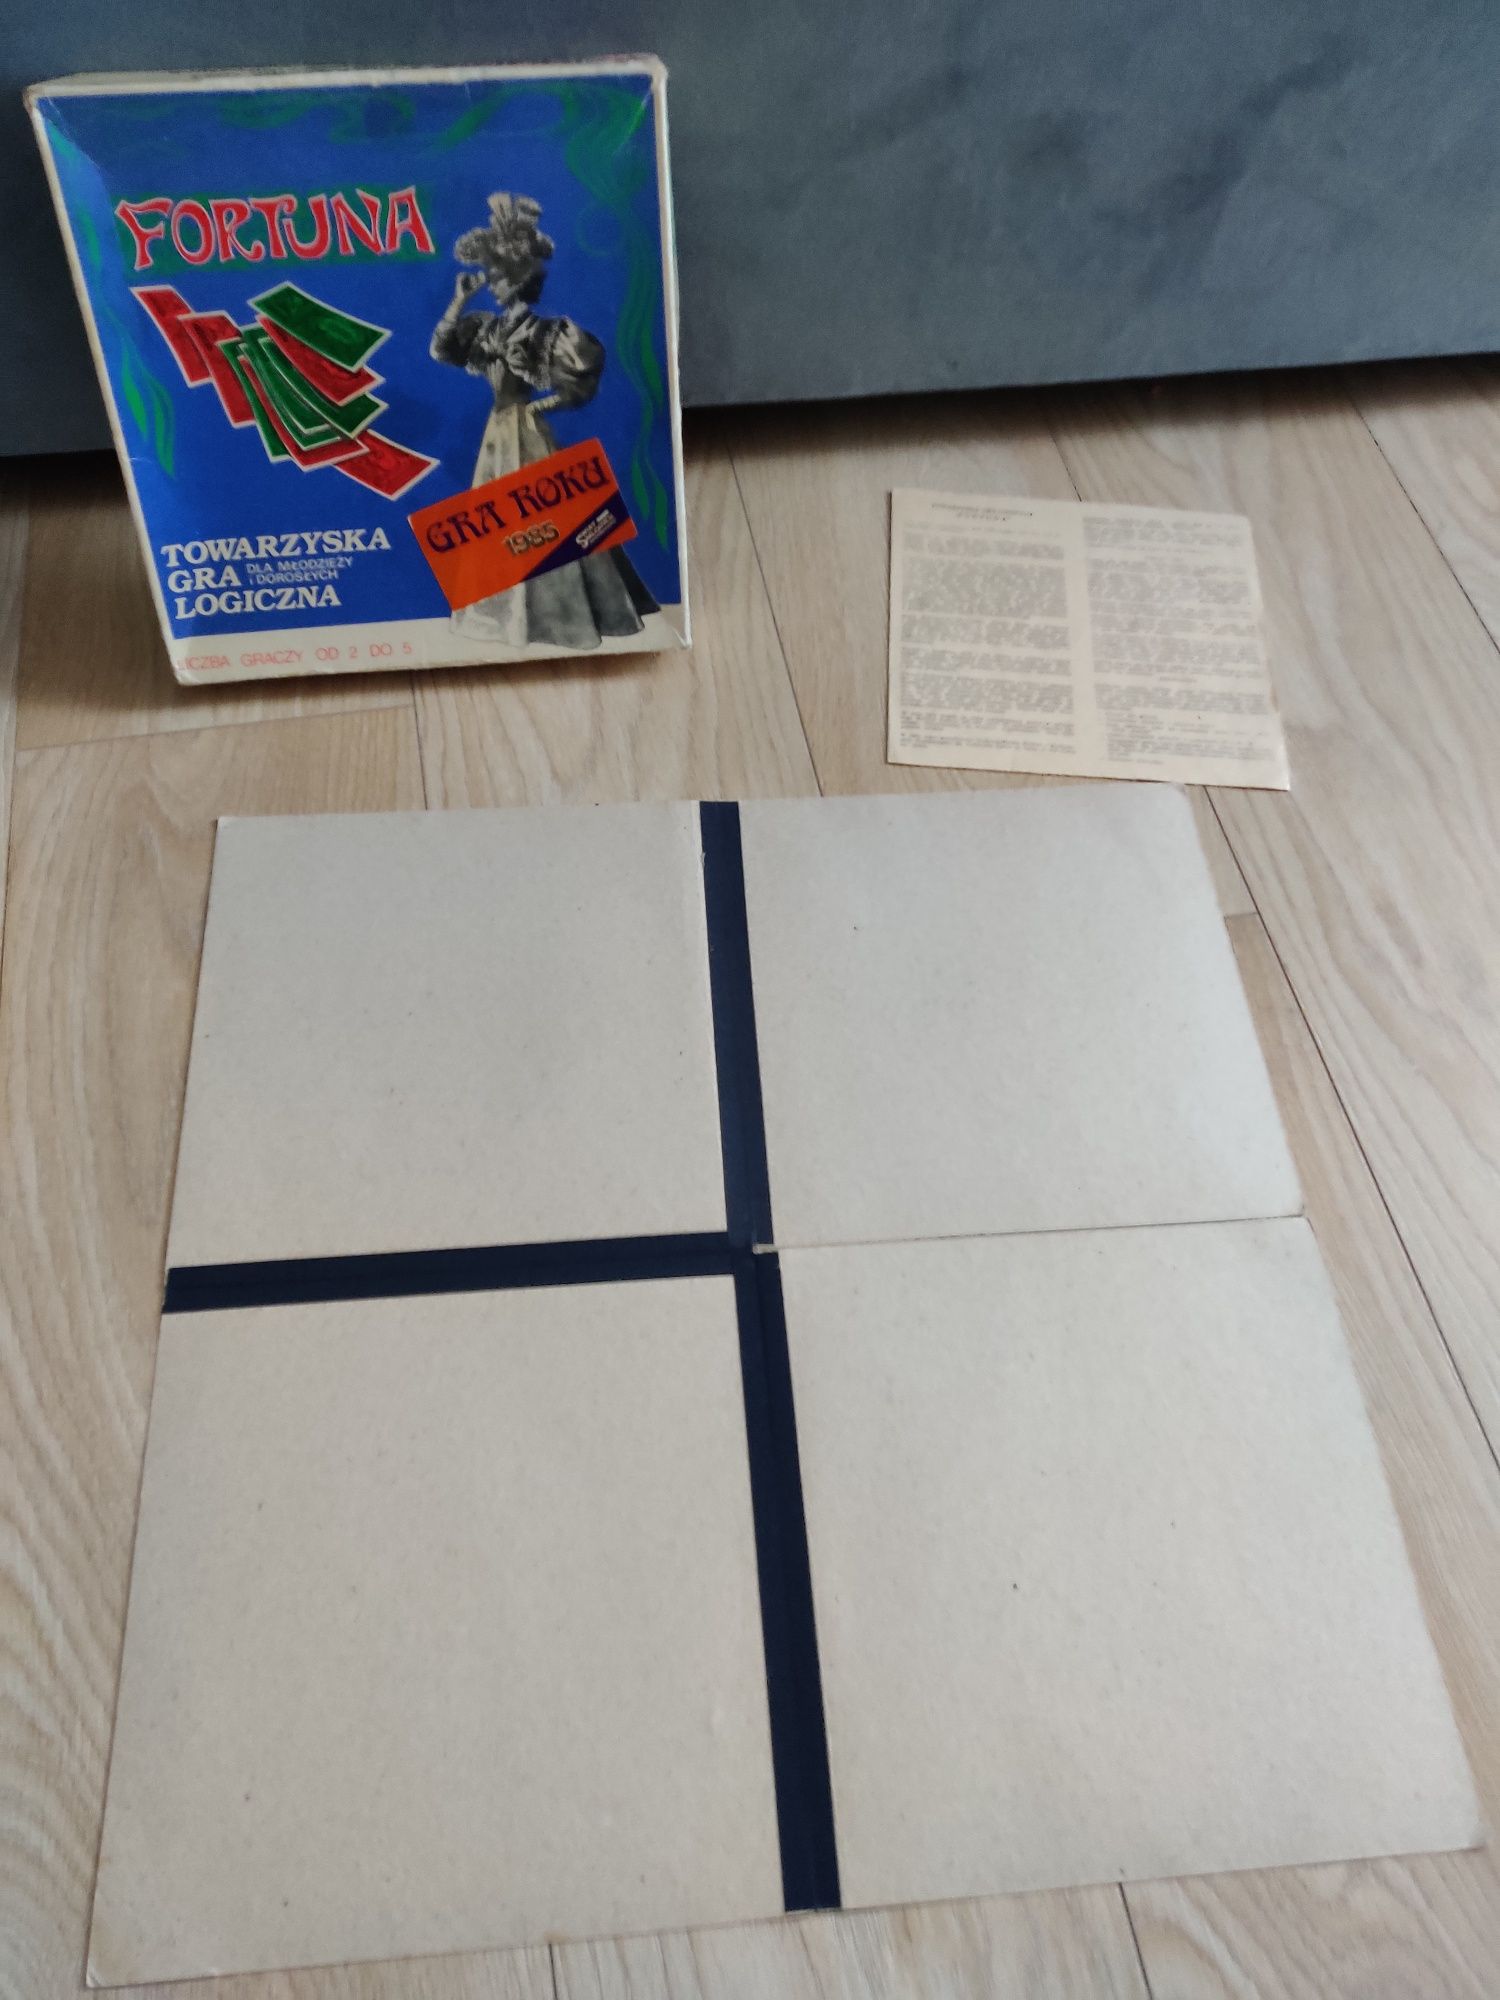 Fortuna kultowa gra towarzyska Unikat 1985 kompletna